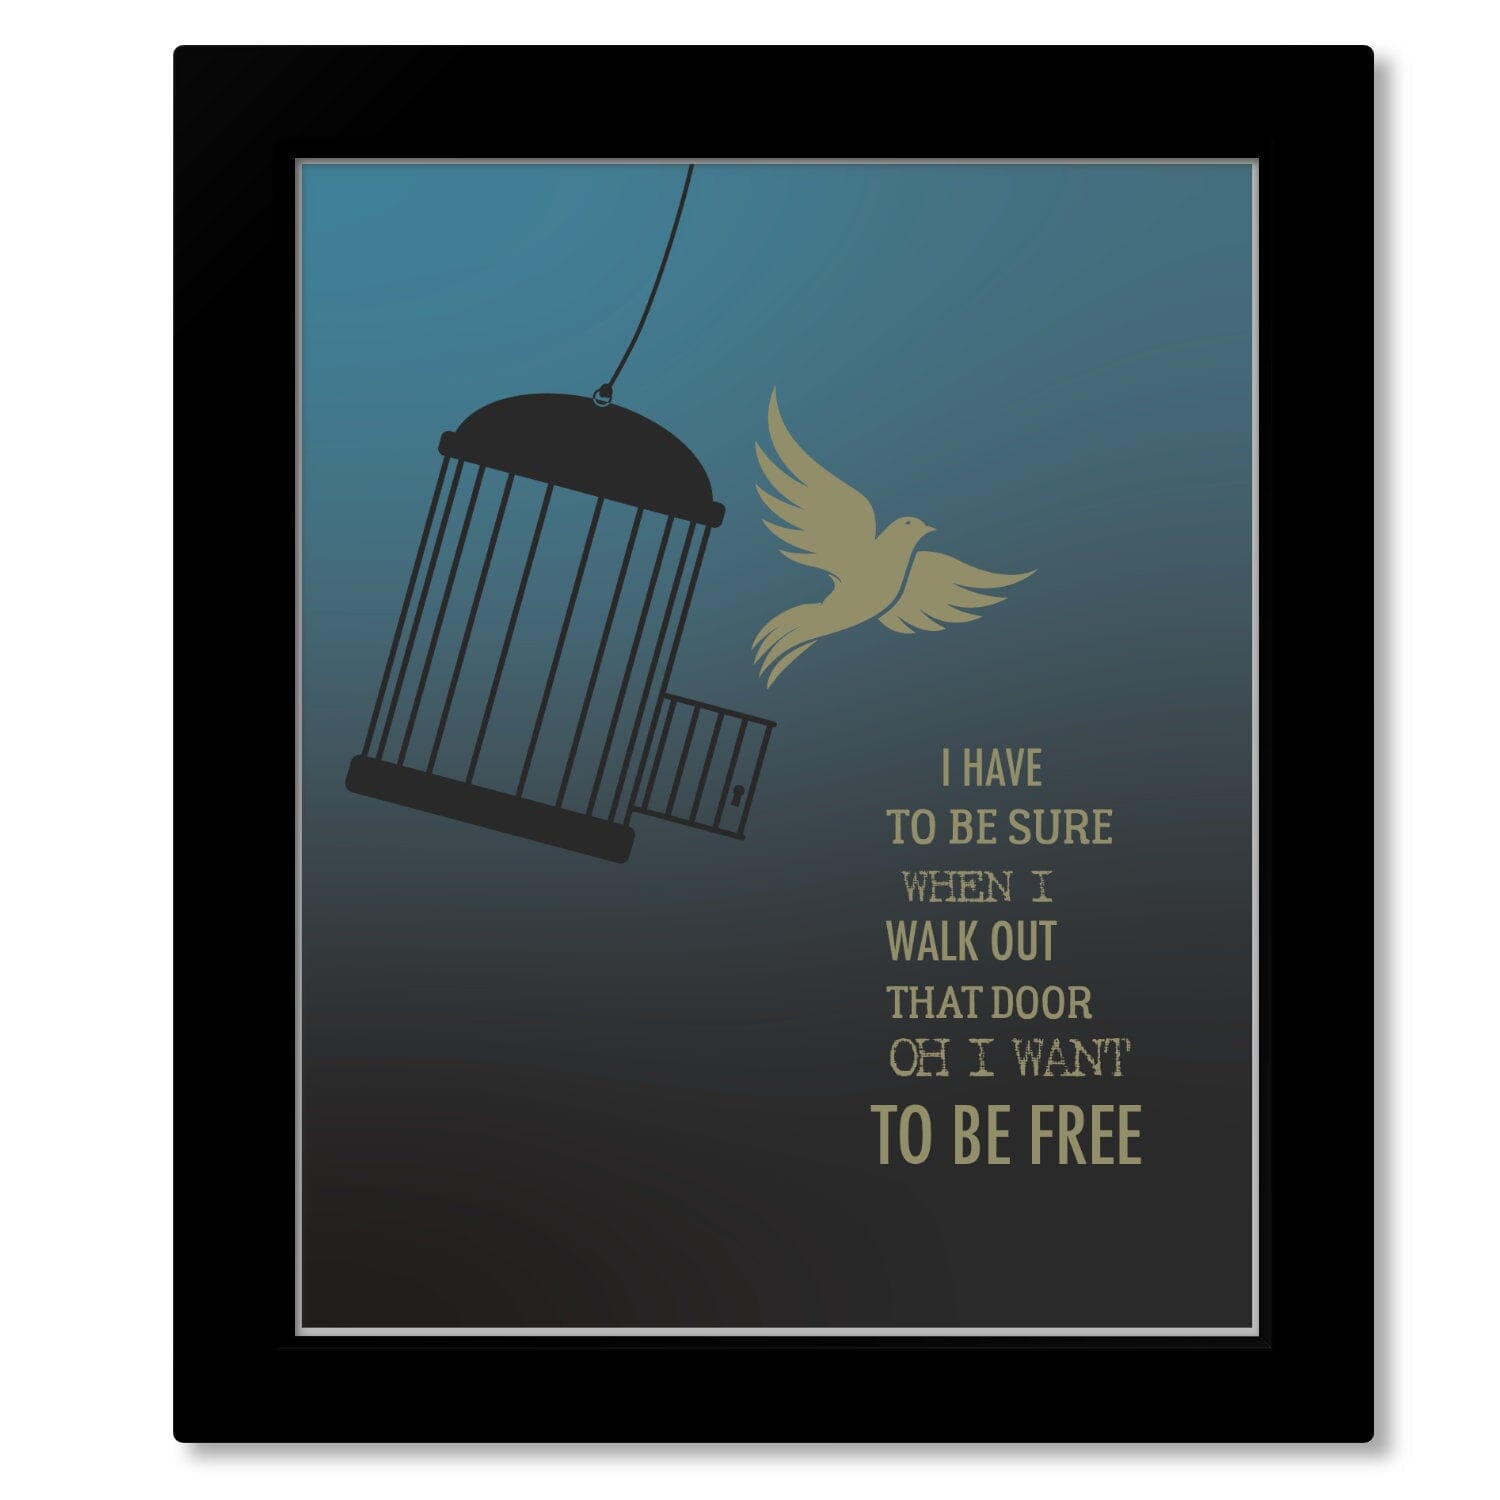 I Want to Break Free by Queen - Lyric Inspired Wall Art Rock Music Print Song Lyrics Art Song Lyrics Art 8x10 Framed Print (without mat) 